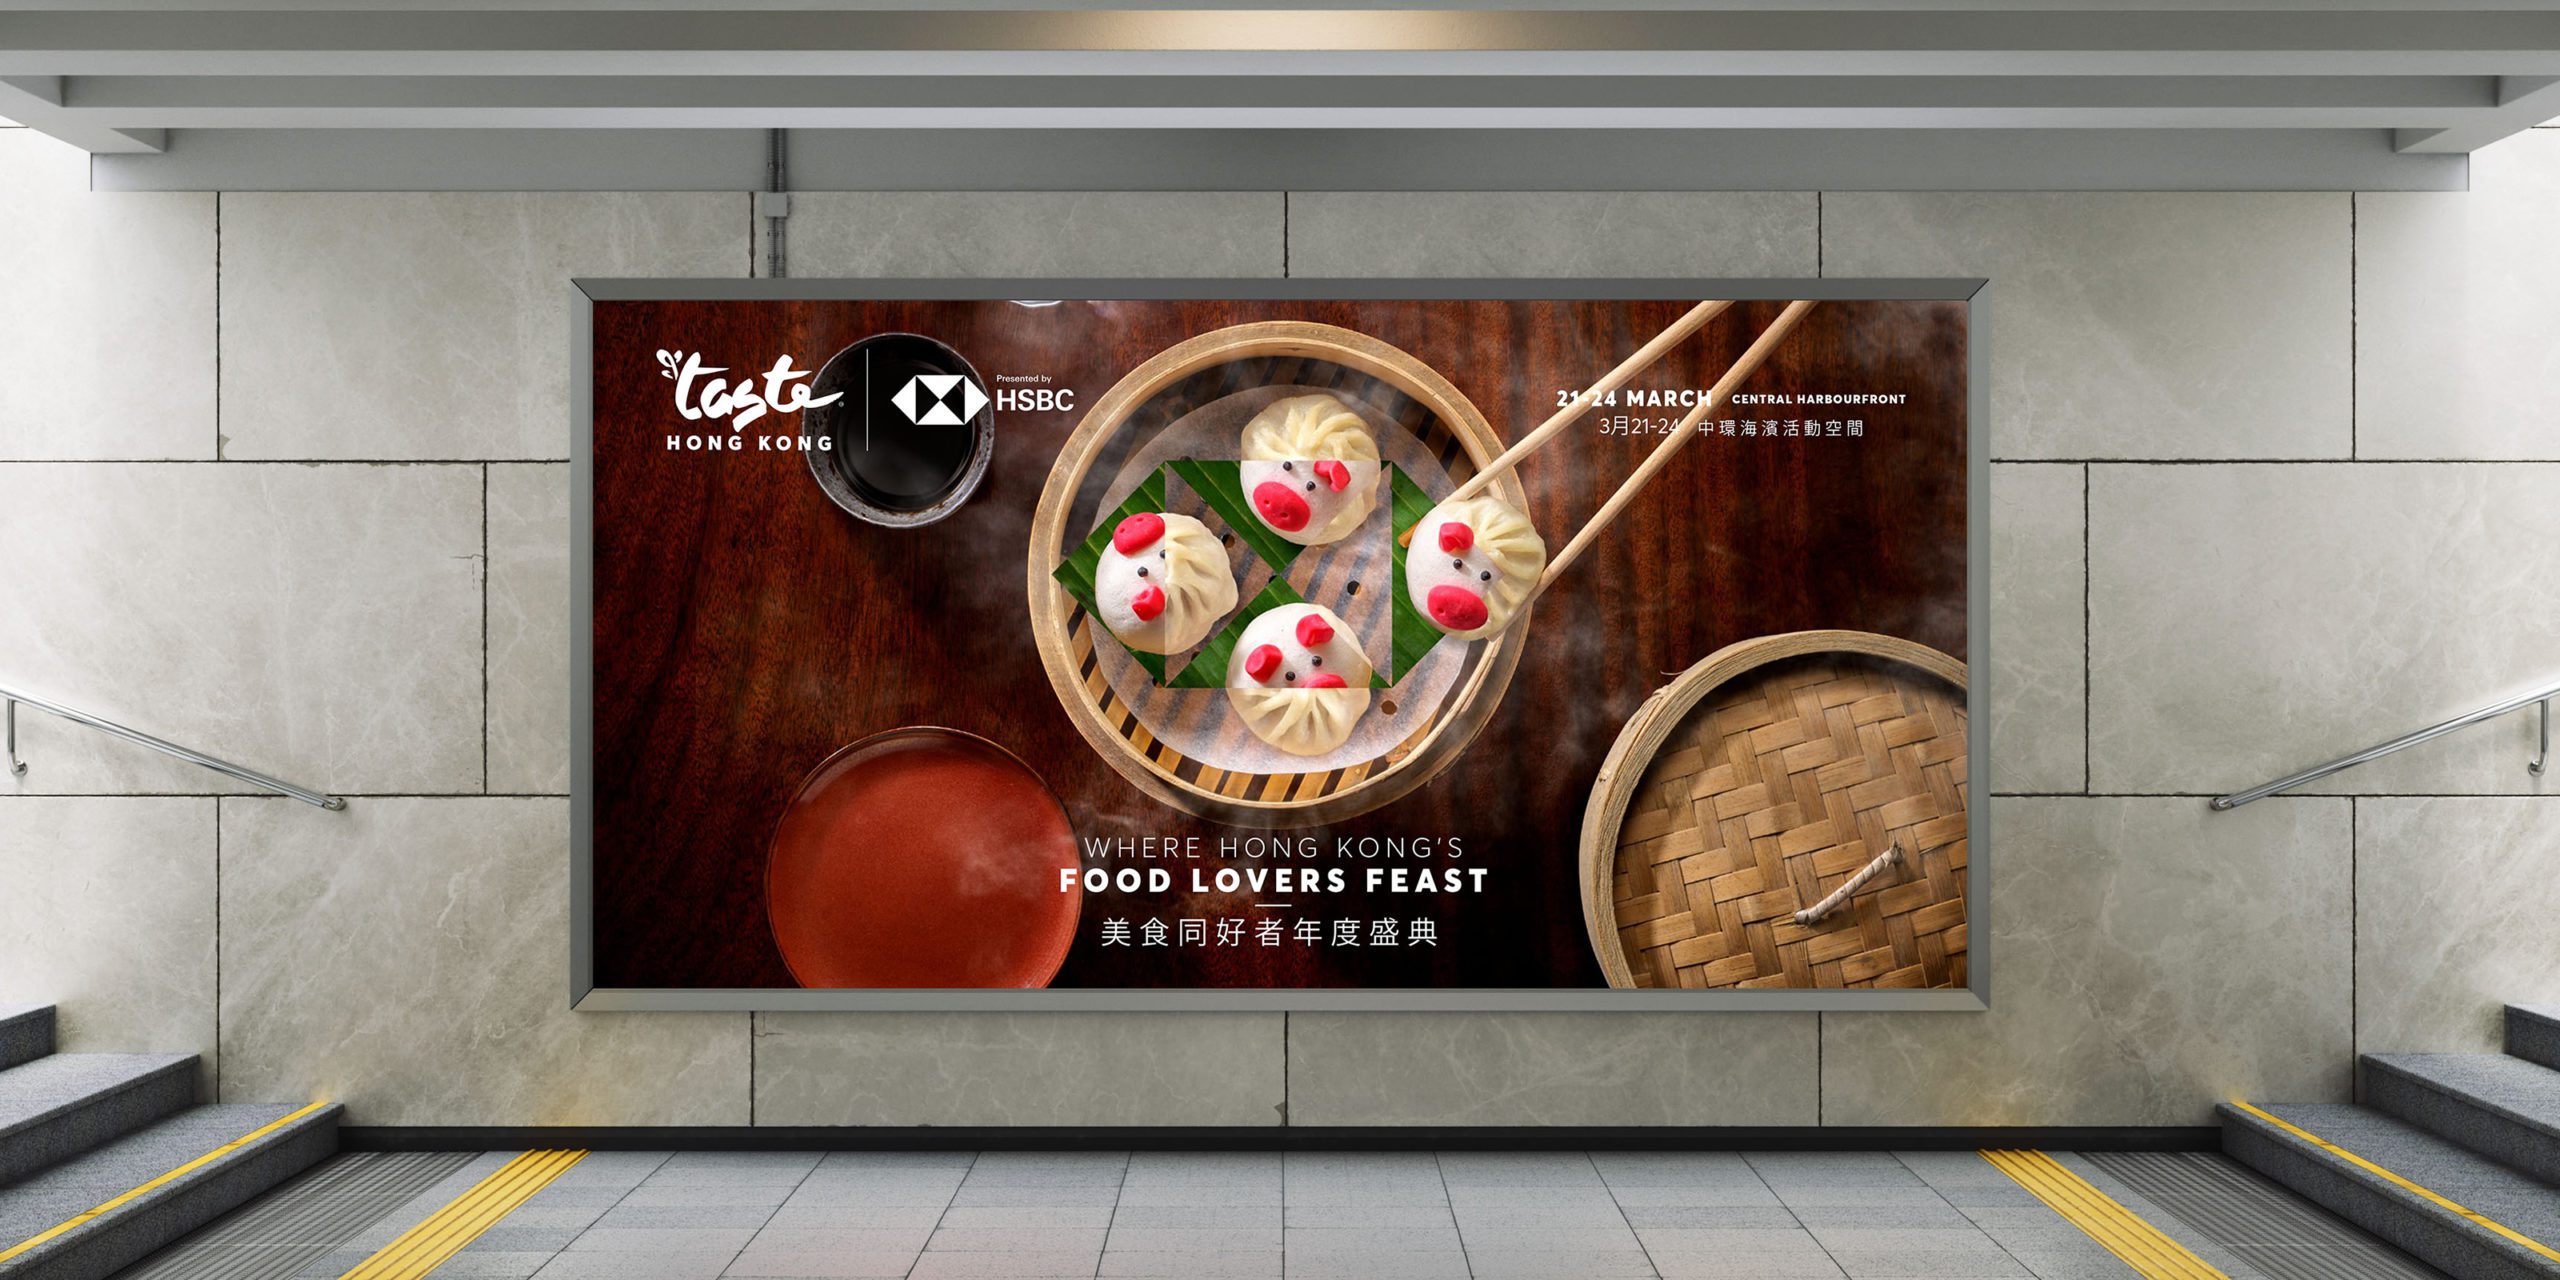 Taste of Hong Kong landscape advertisement in metro station